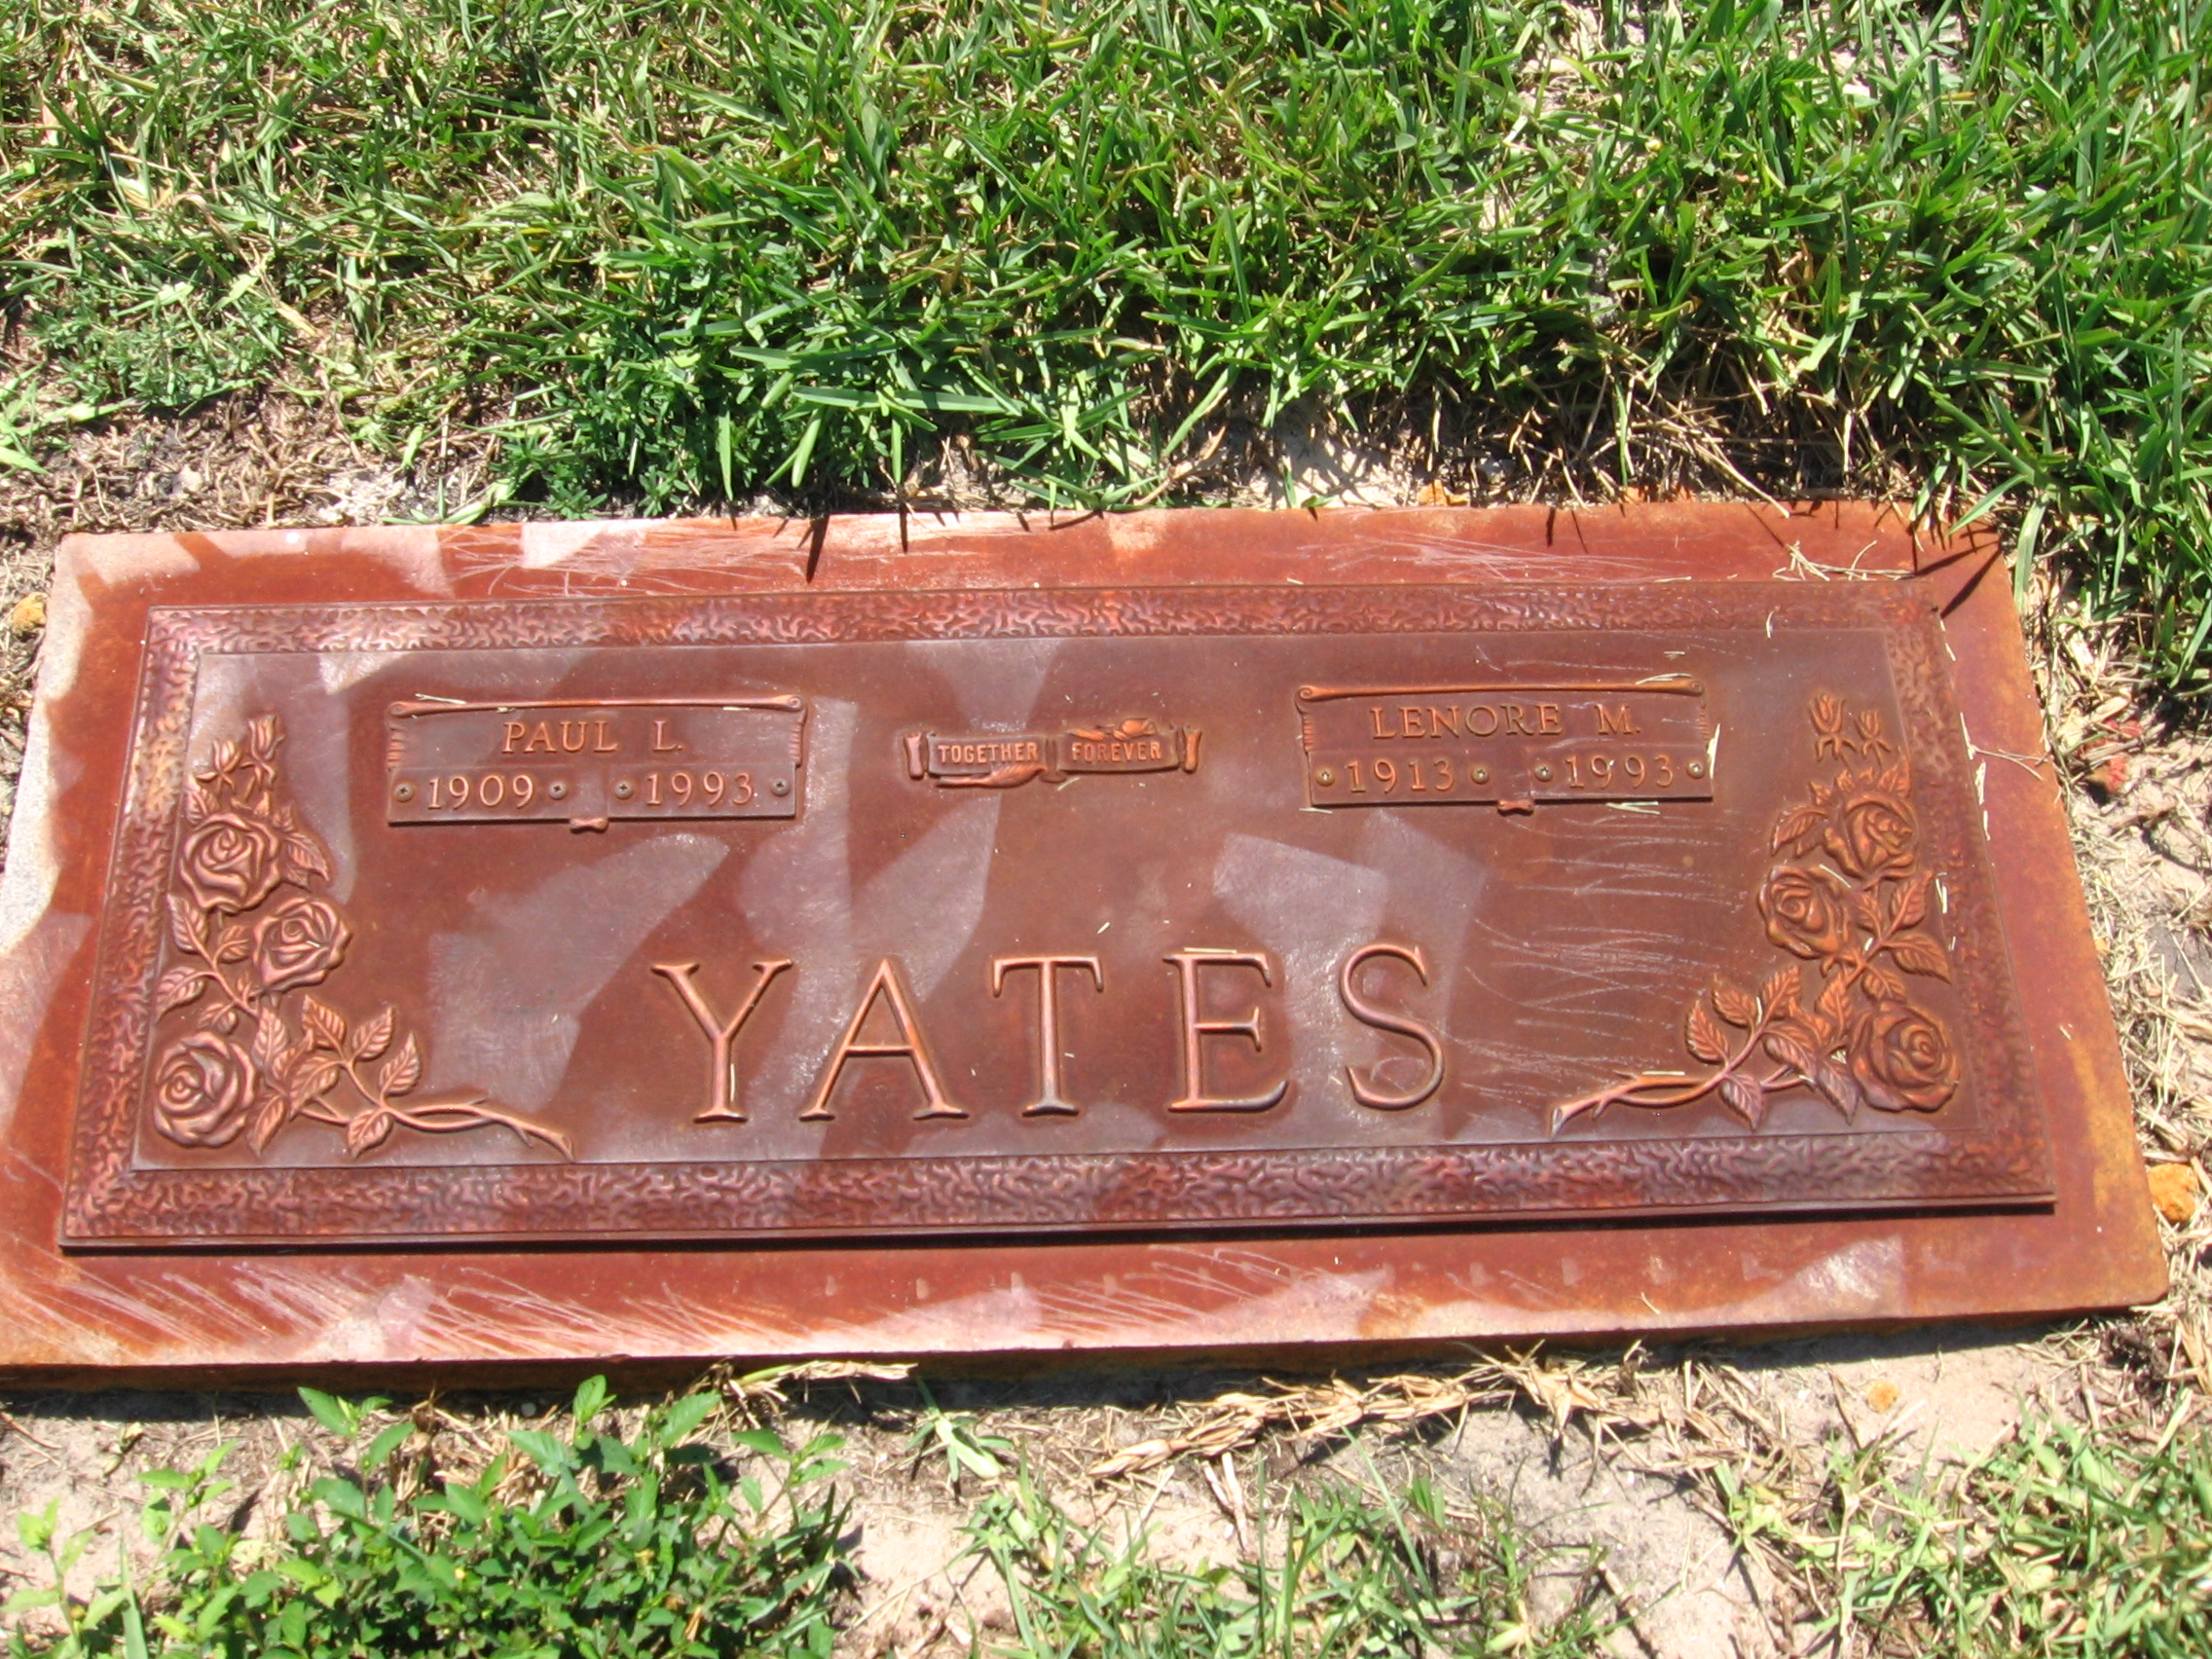 Paul L Yates